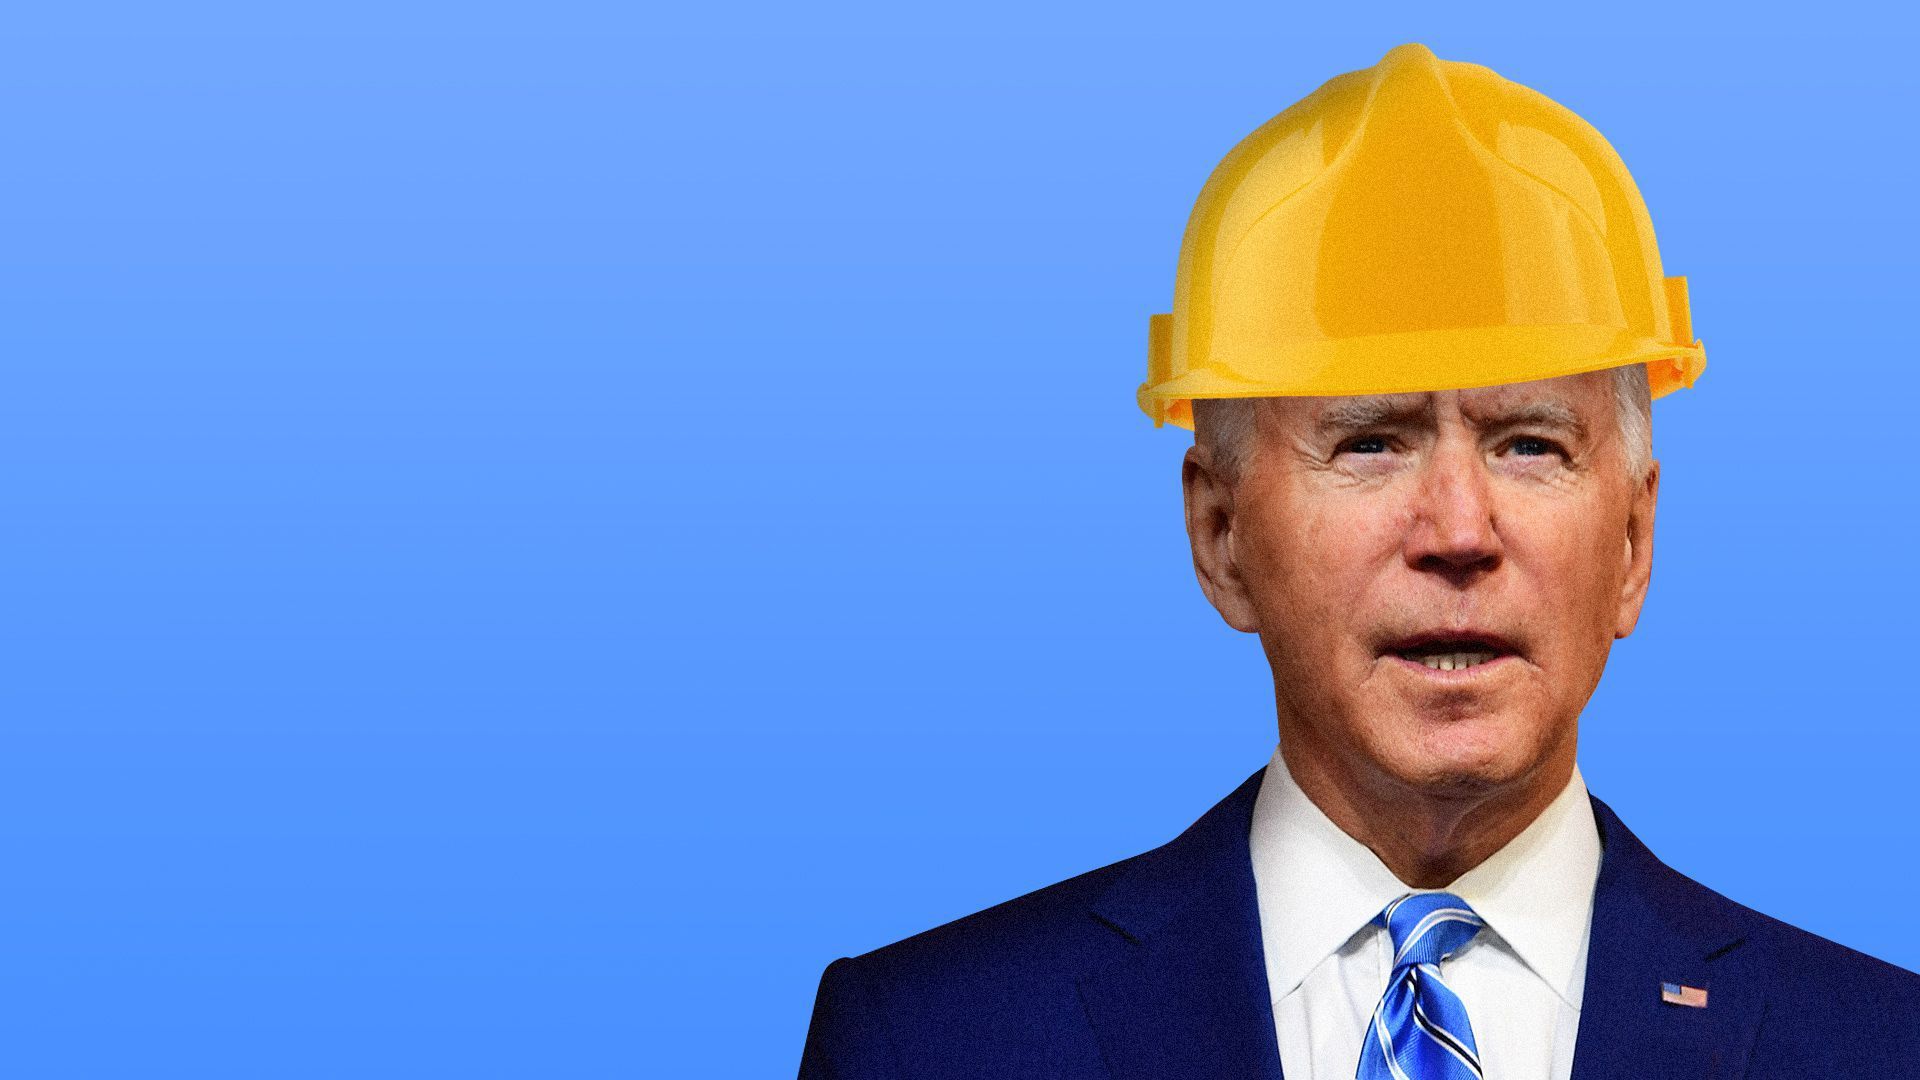 Biden wearing hard hat